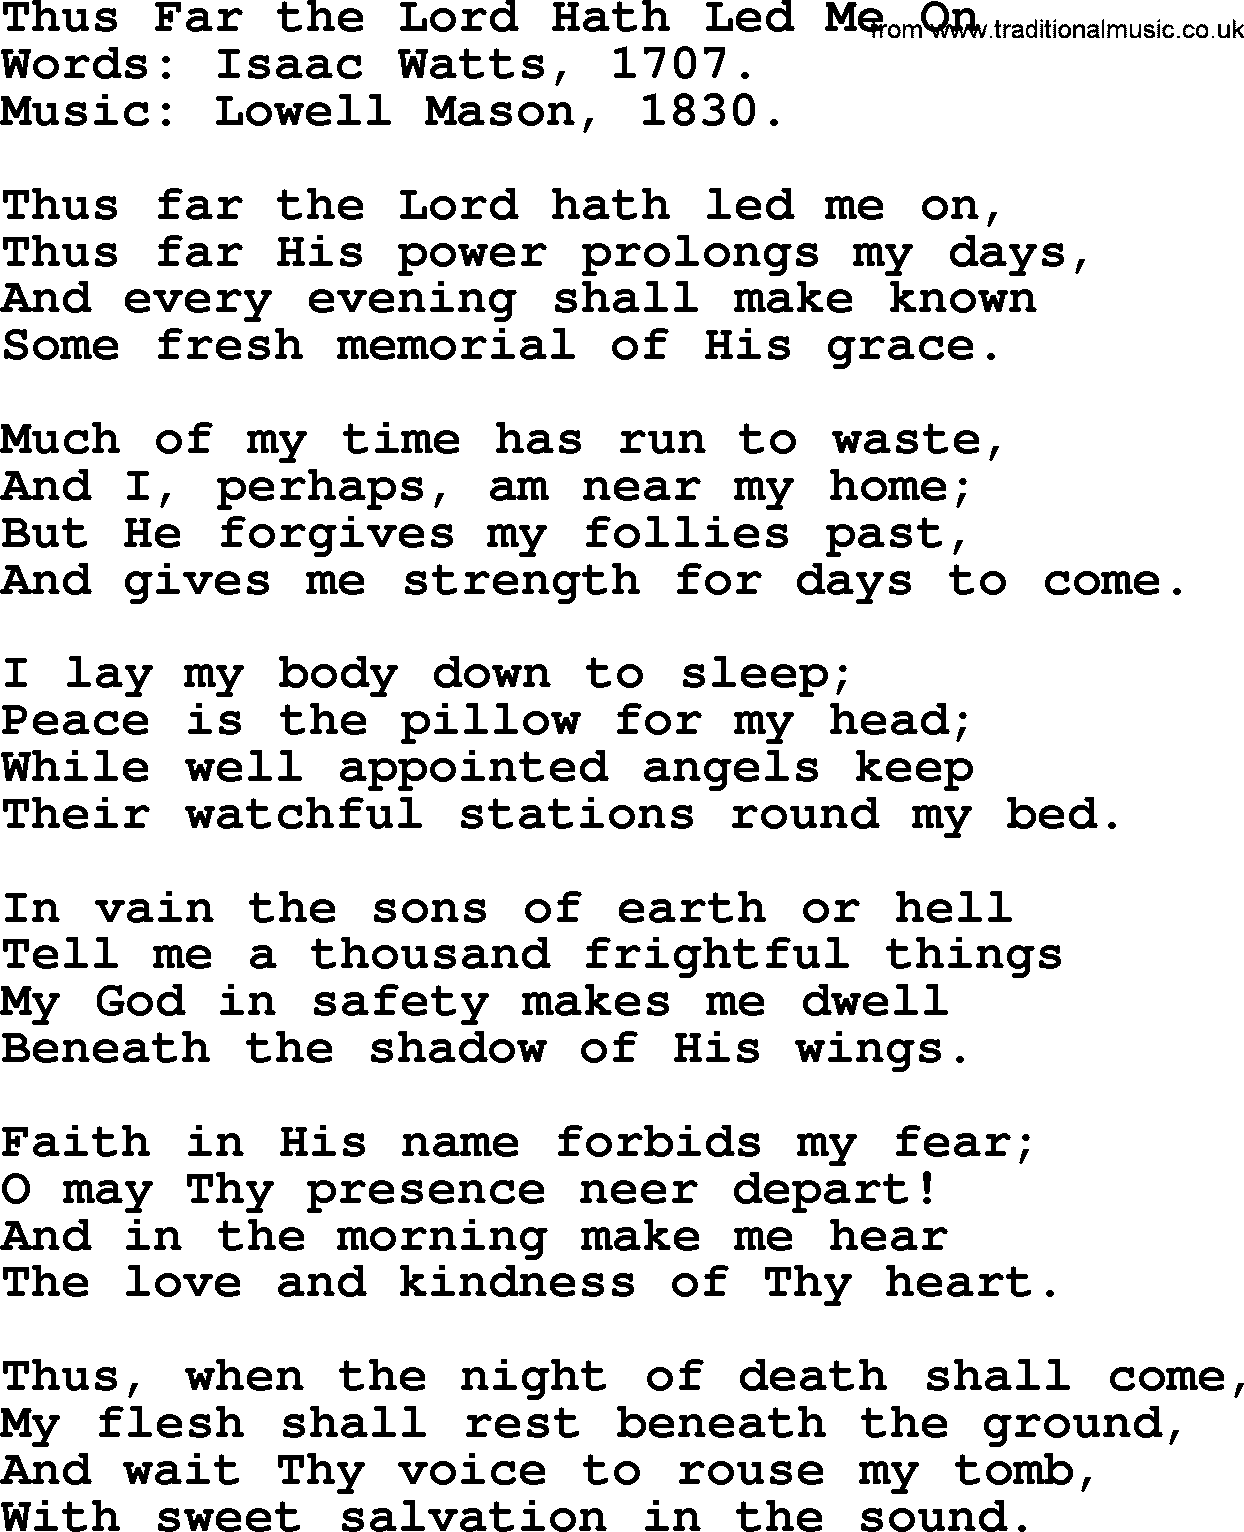 Isaac Watts Christian hymn: Thus Far the Lord Hath Led Me On- lyricss